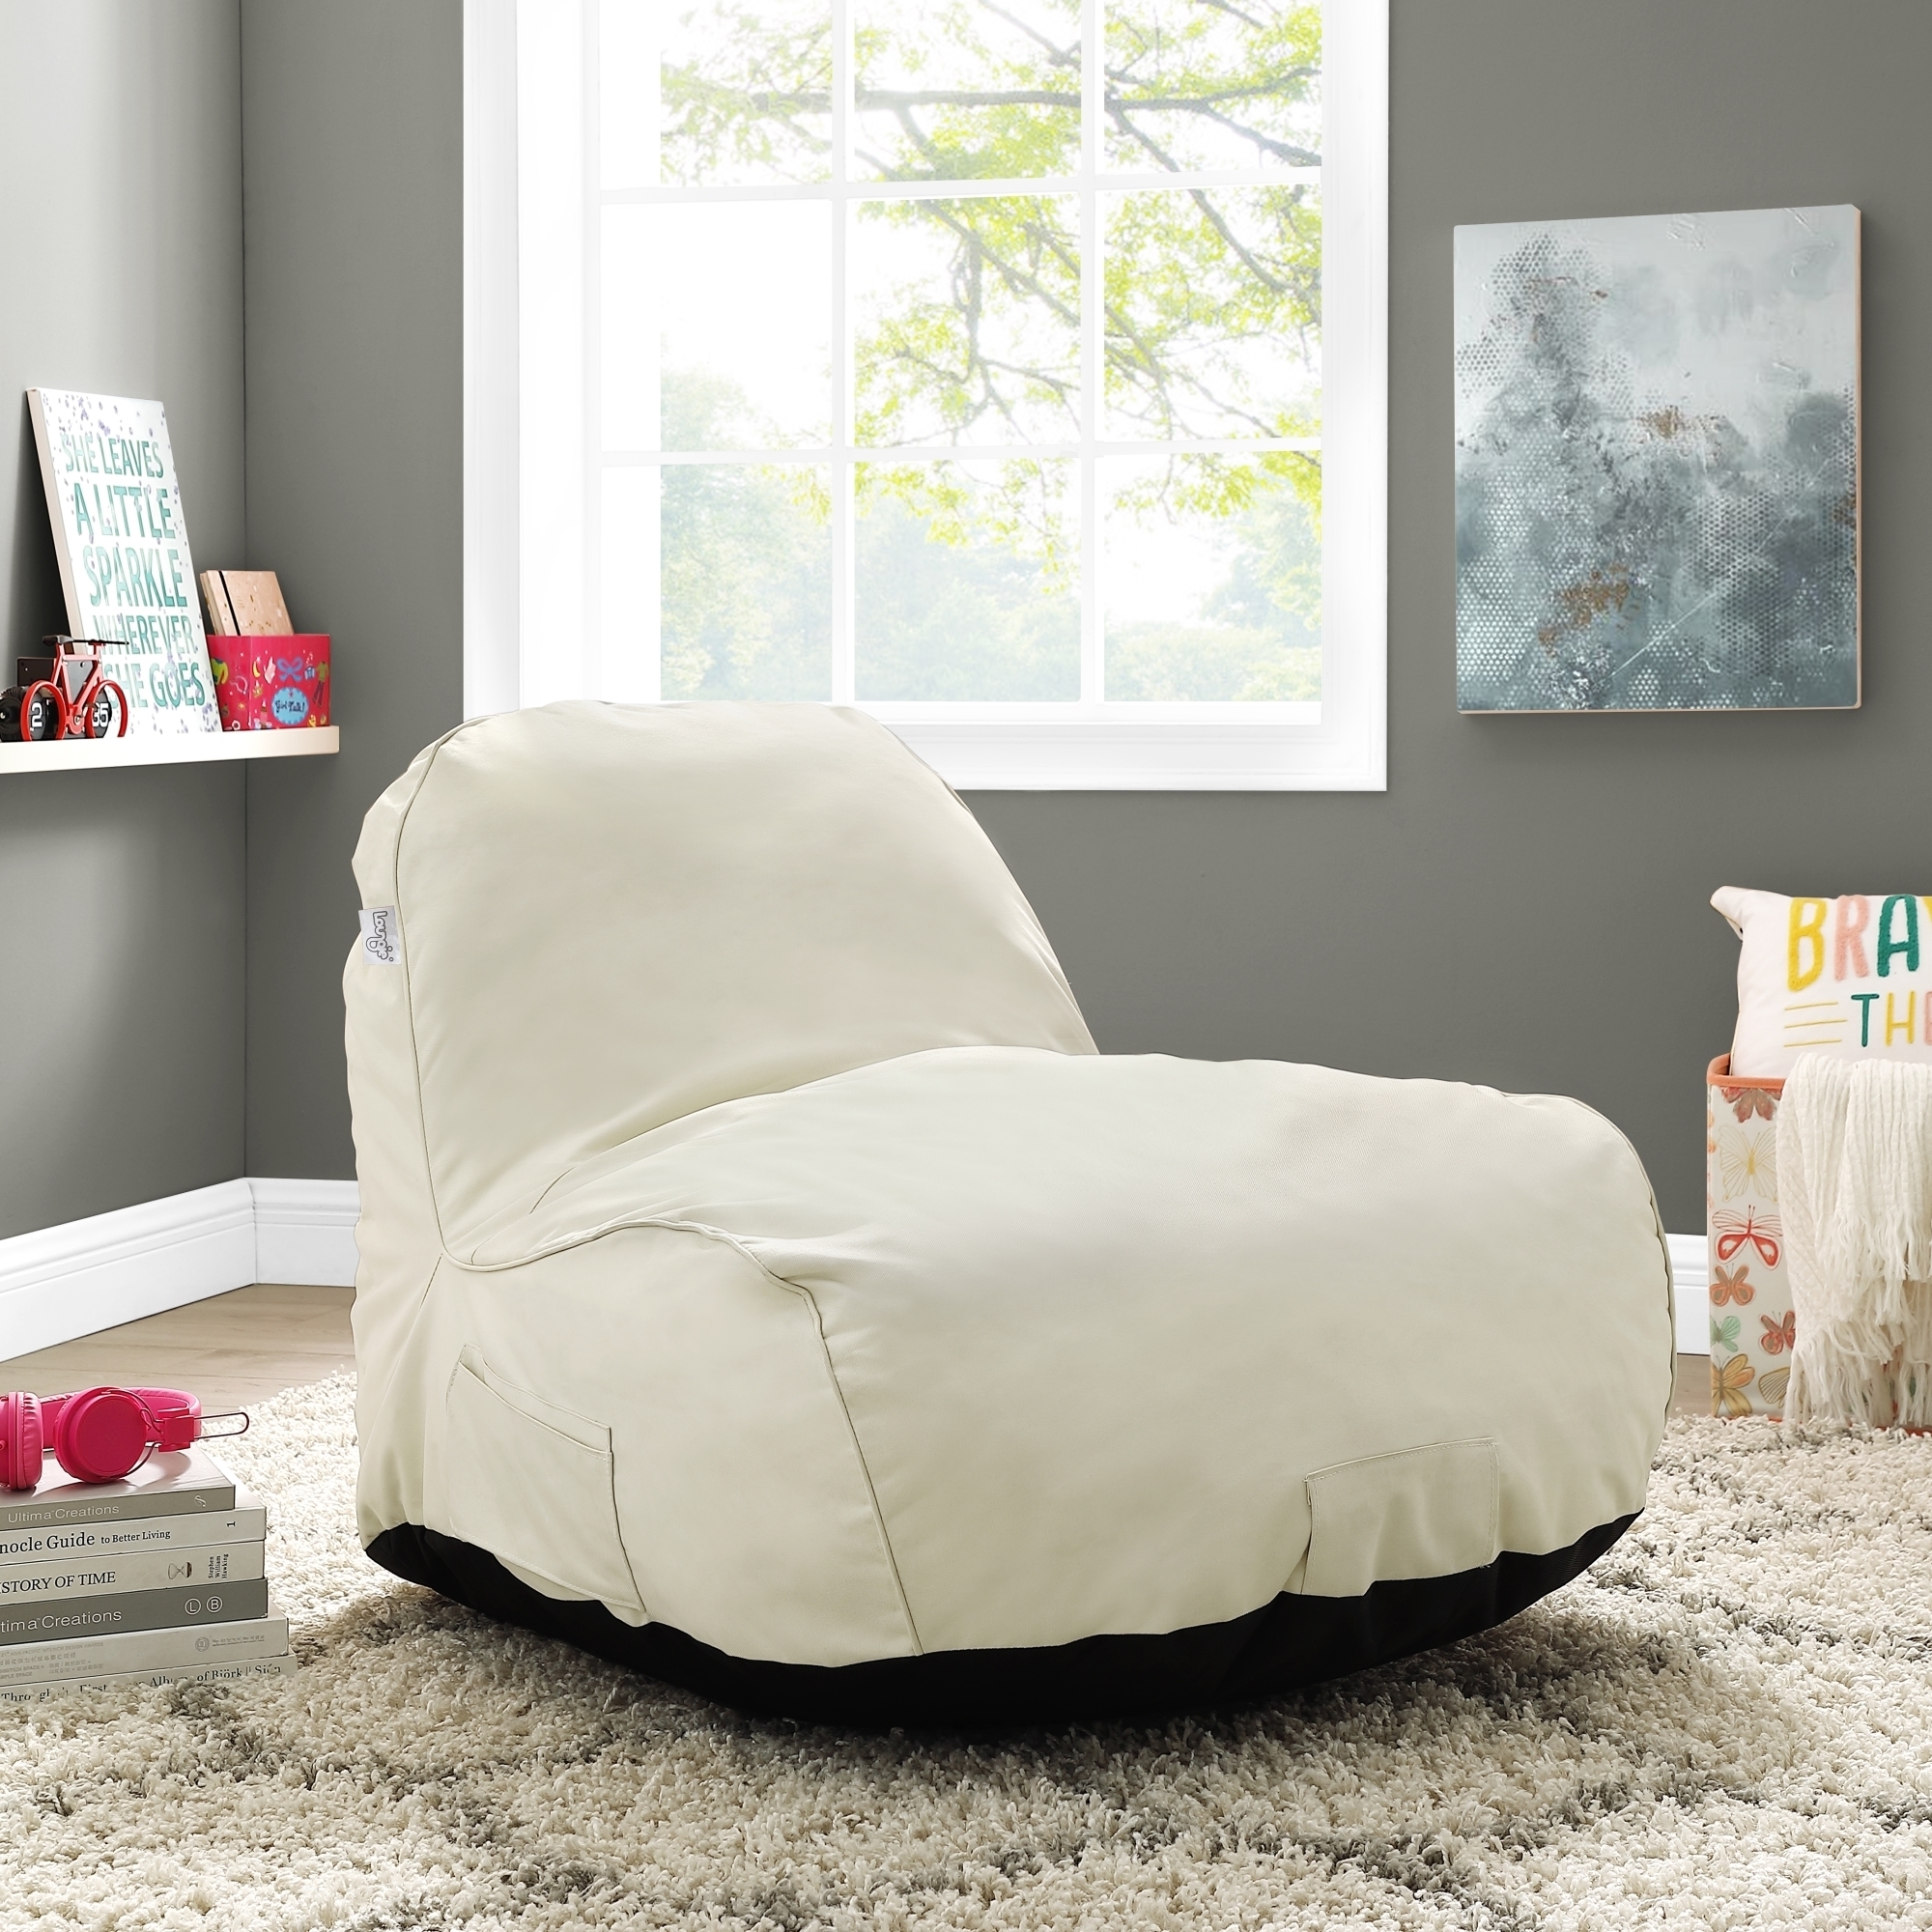 Loungie Cosmic Foam Lounge Chair-Nylon Bean Bag-Indoor- Outdoor-Self Expanding-Water Resistant - Beige